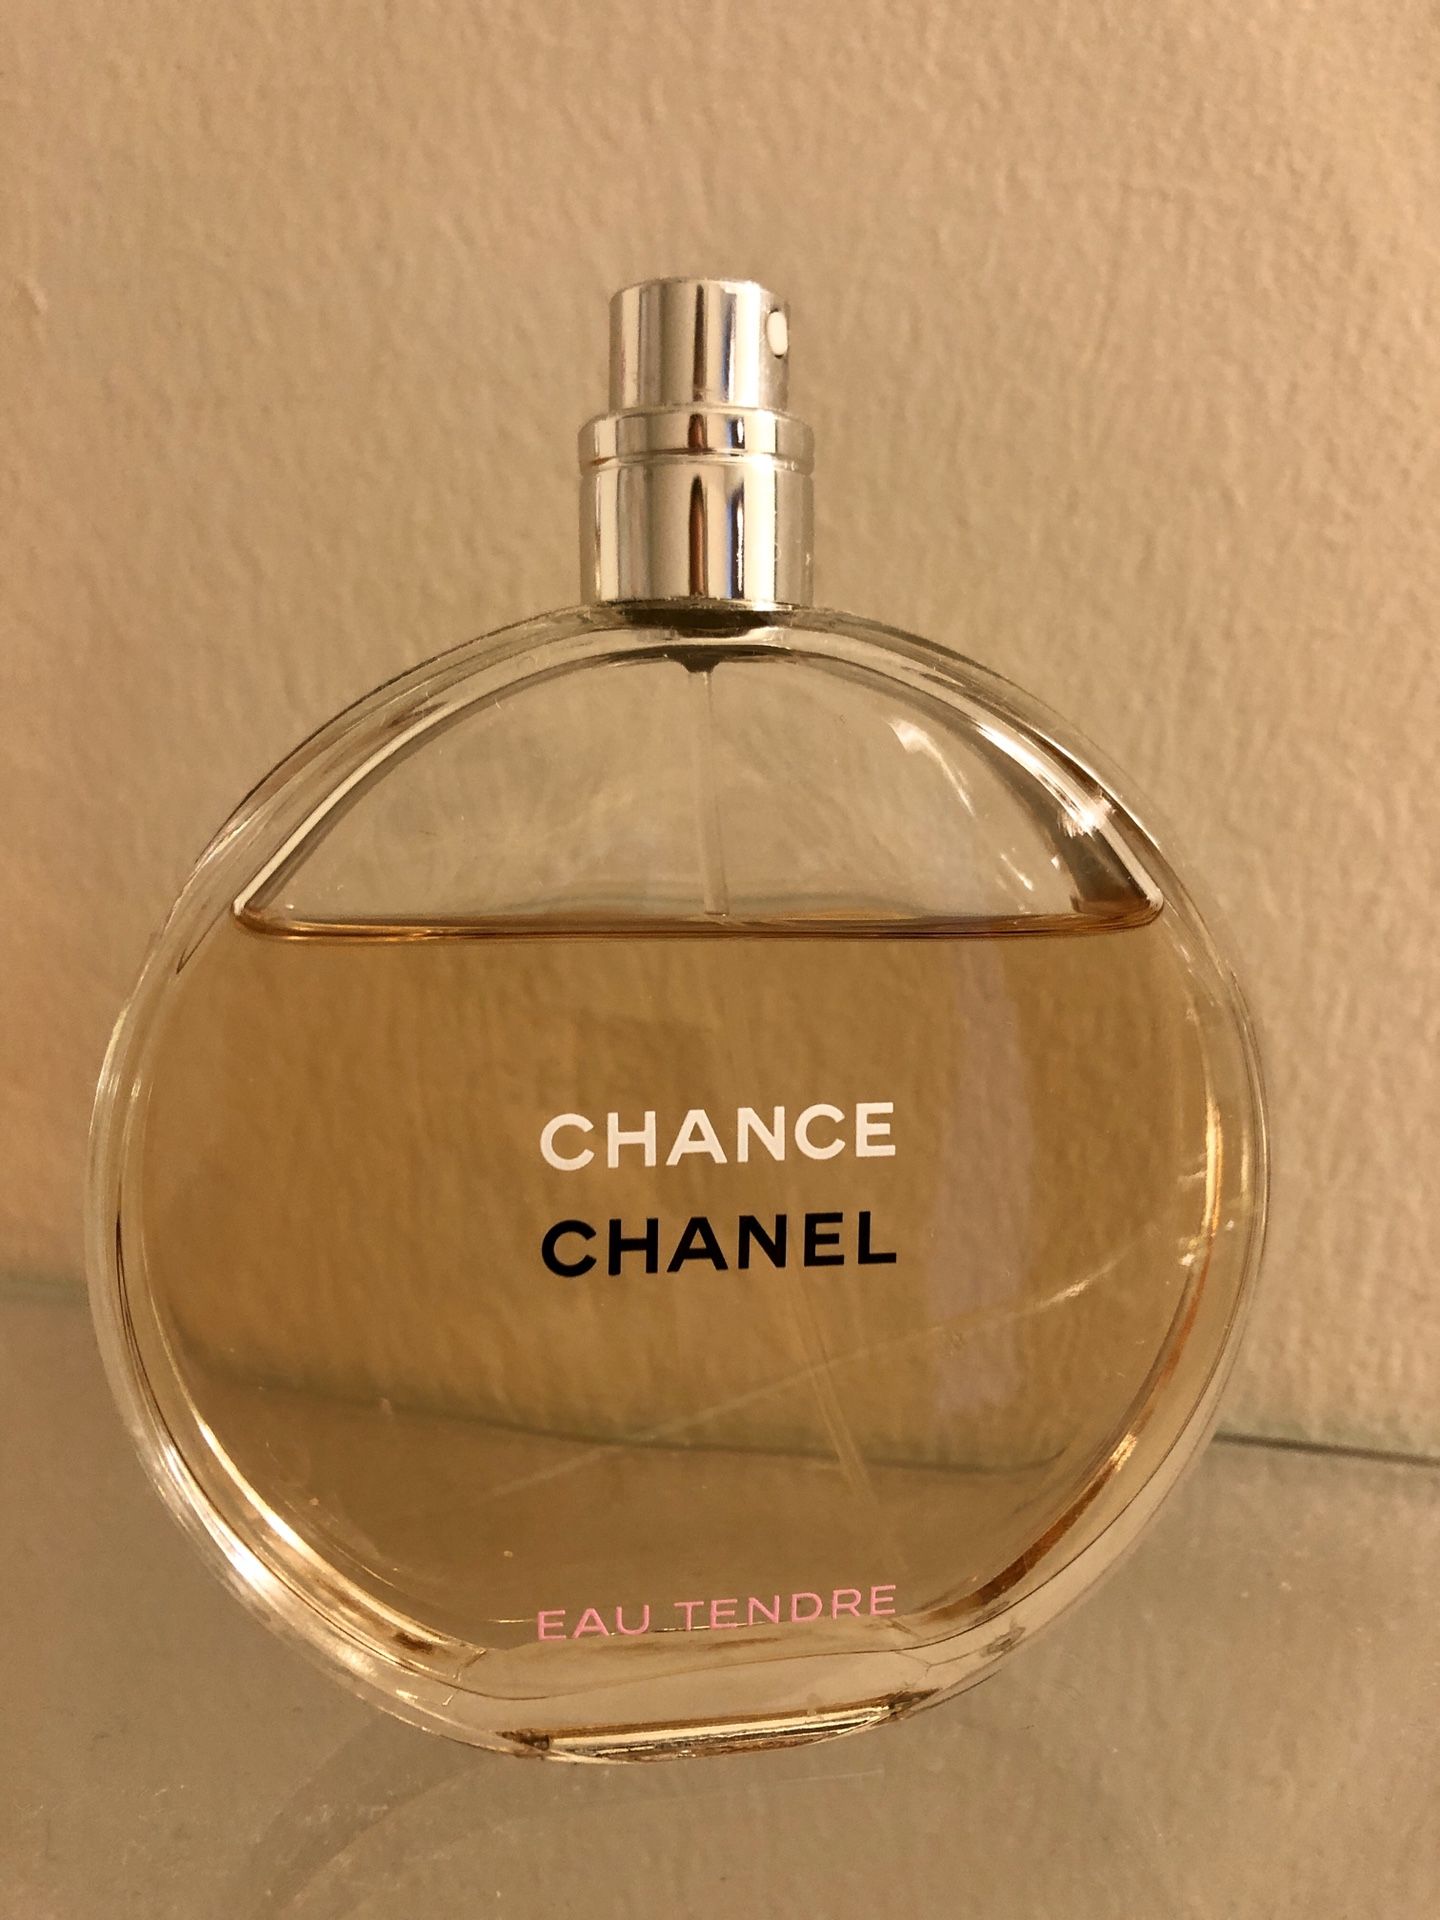 Chanel Chance Eau Tender perfume 3.4oz